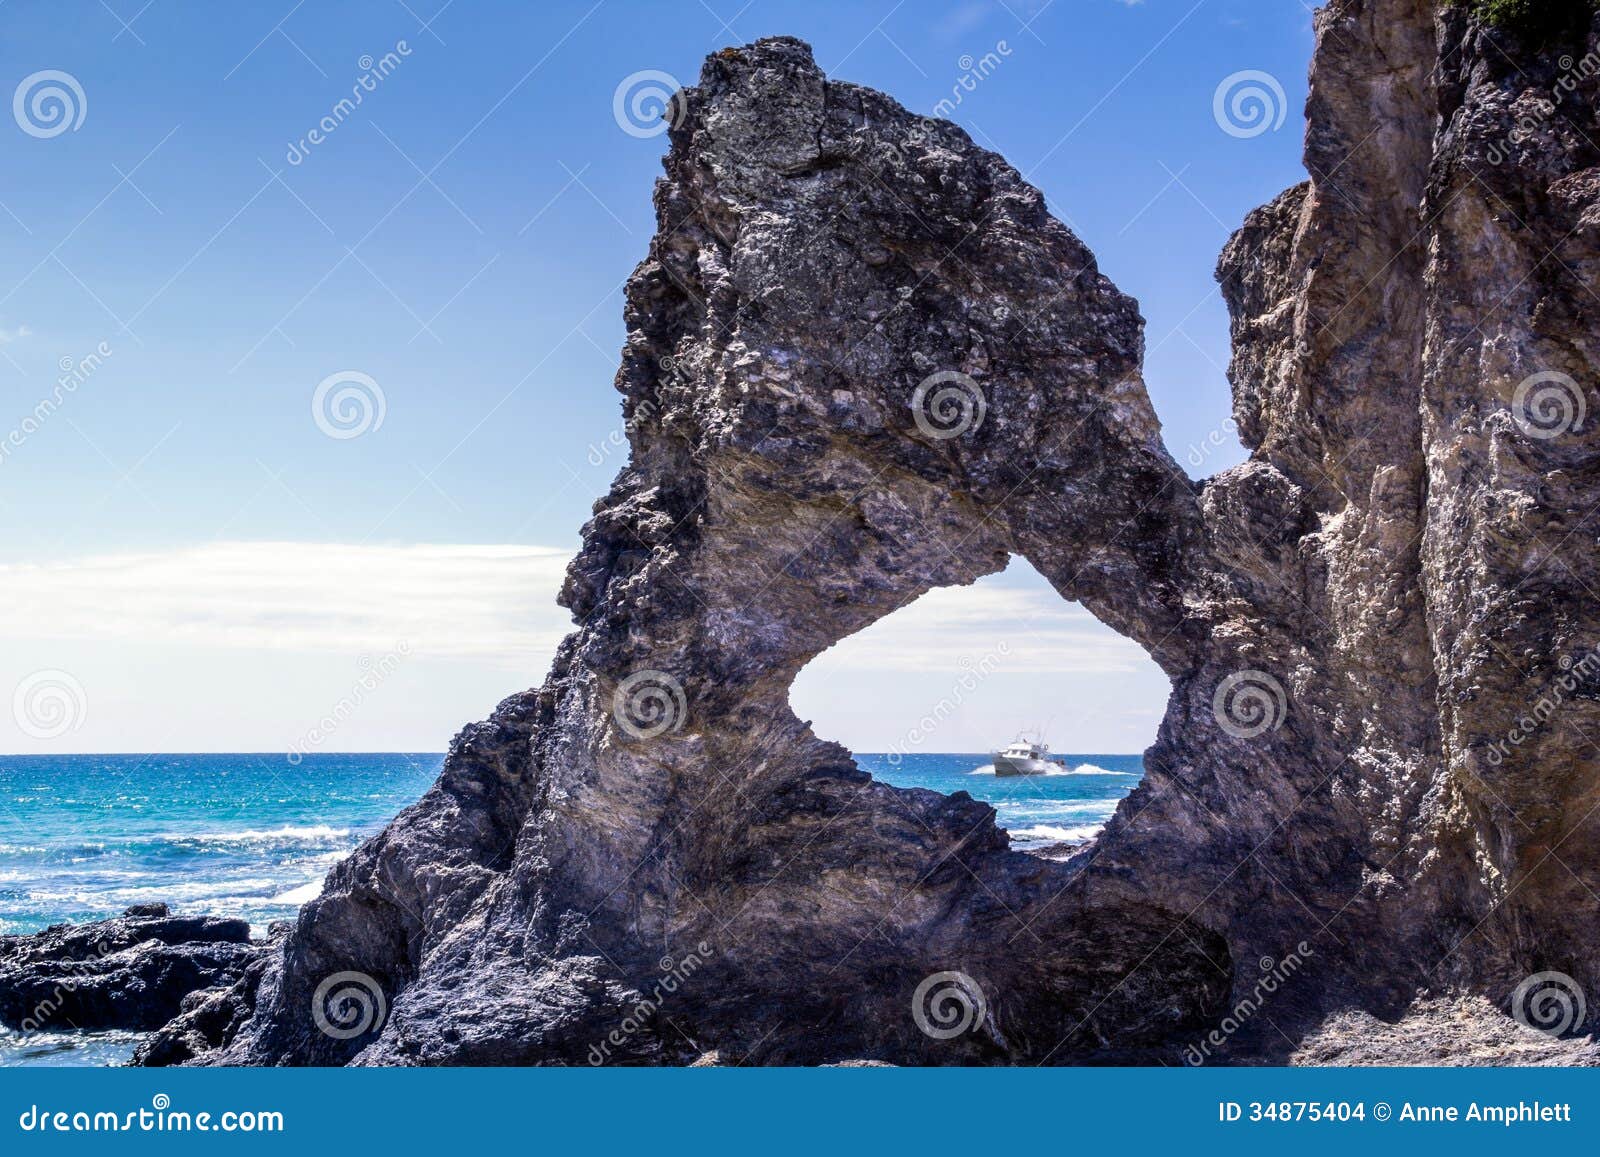 australia rock stock images - image: 34875404